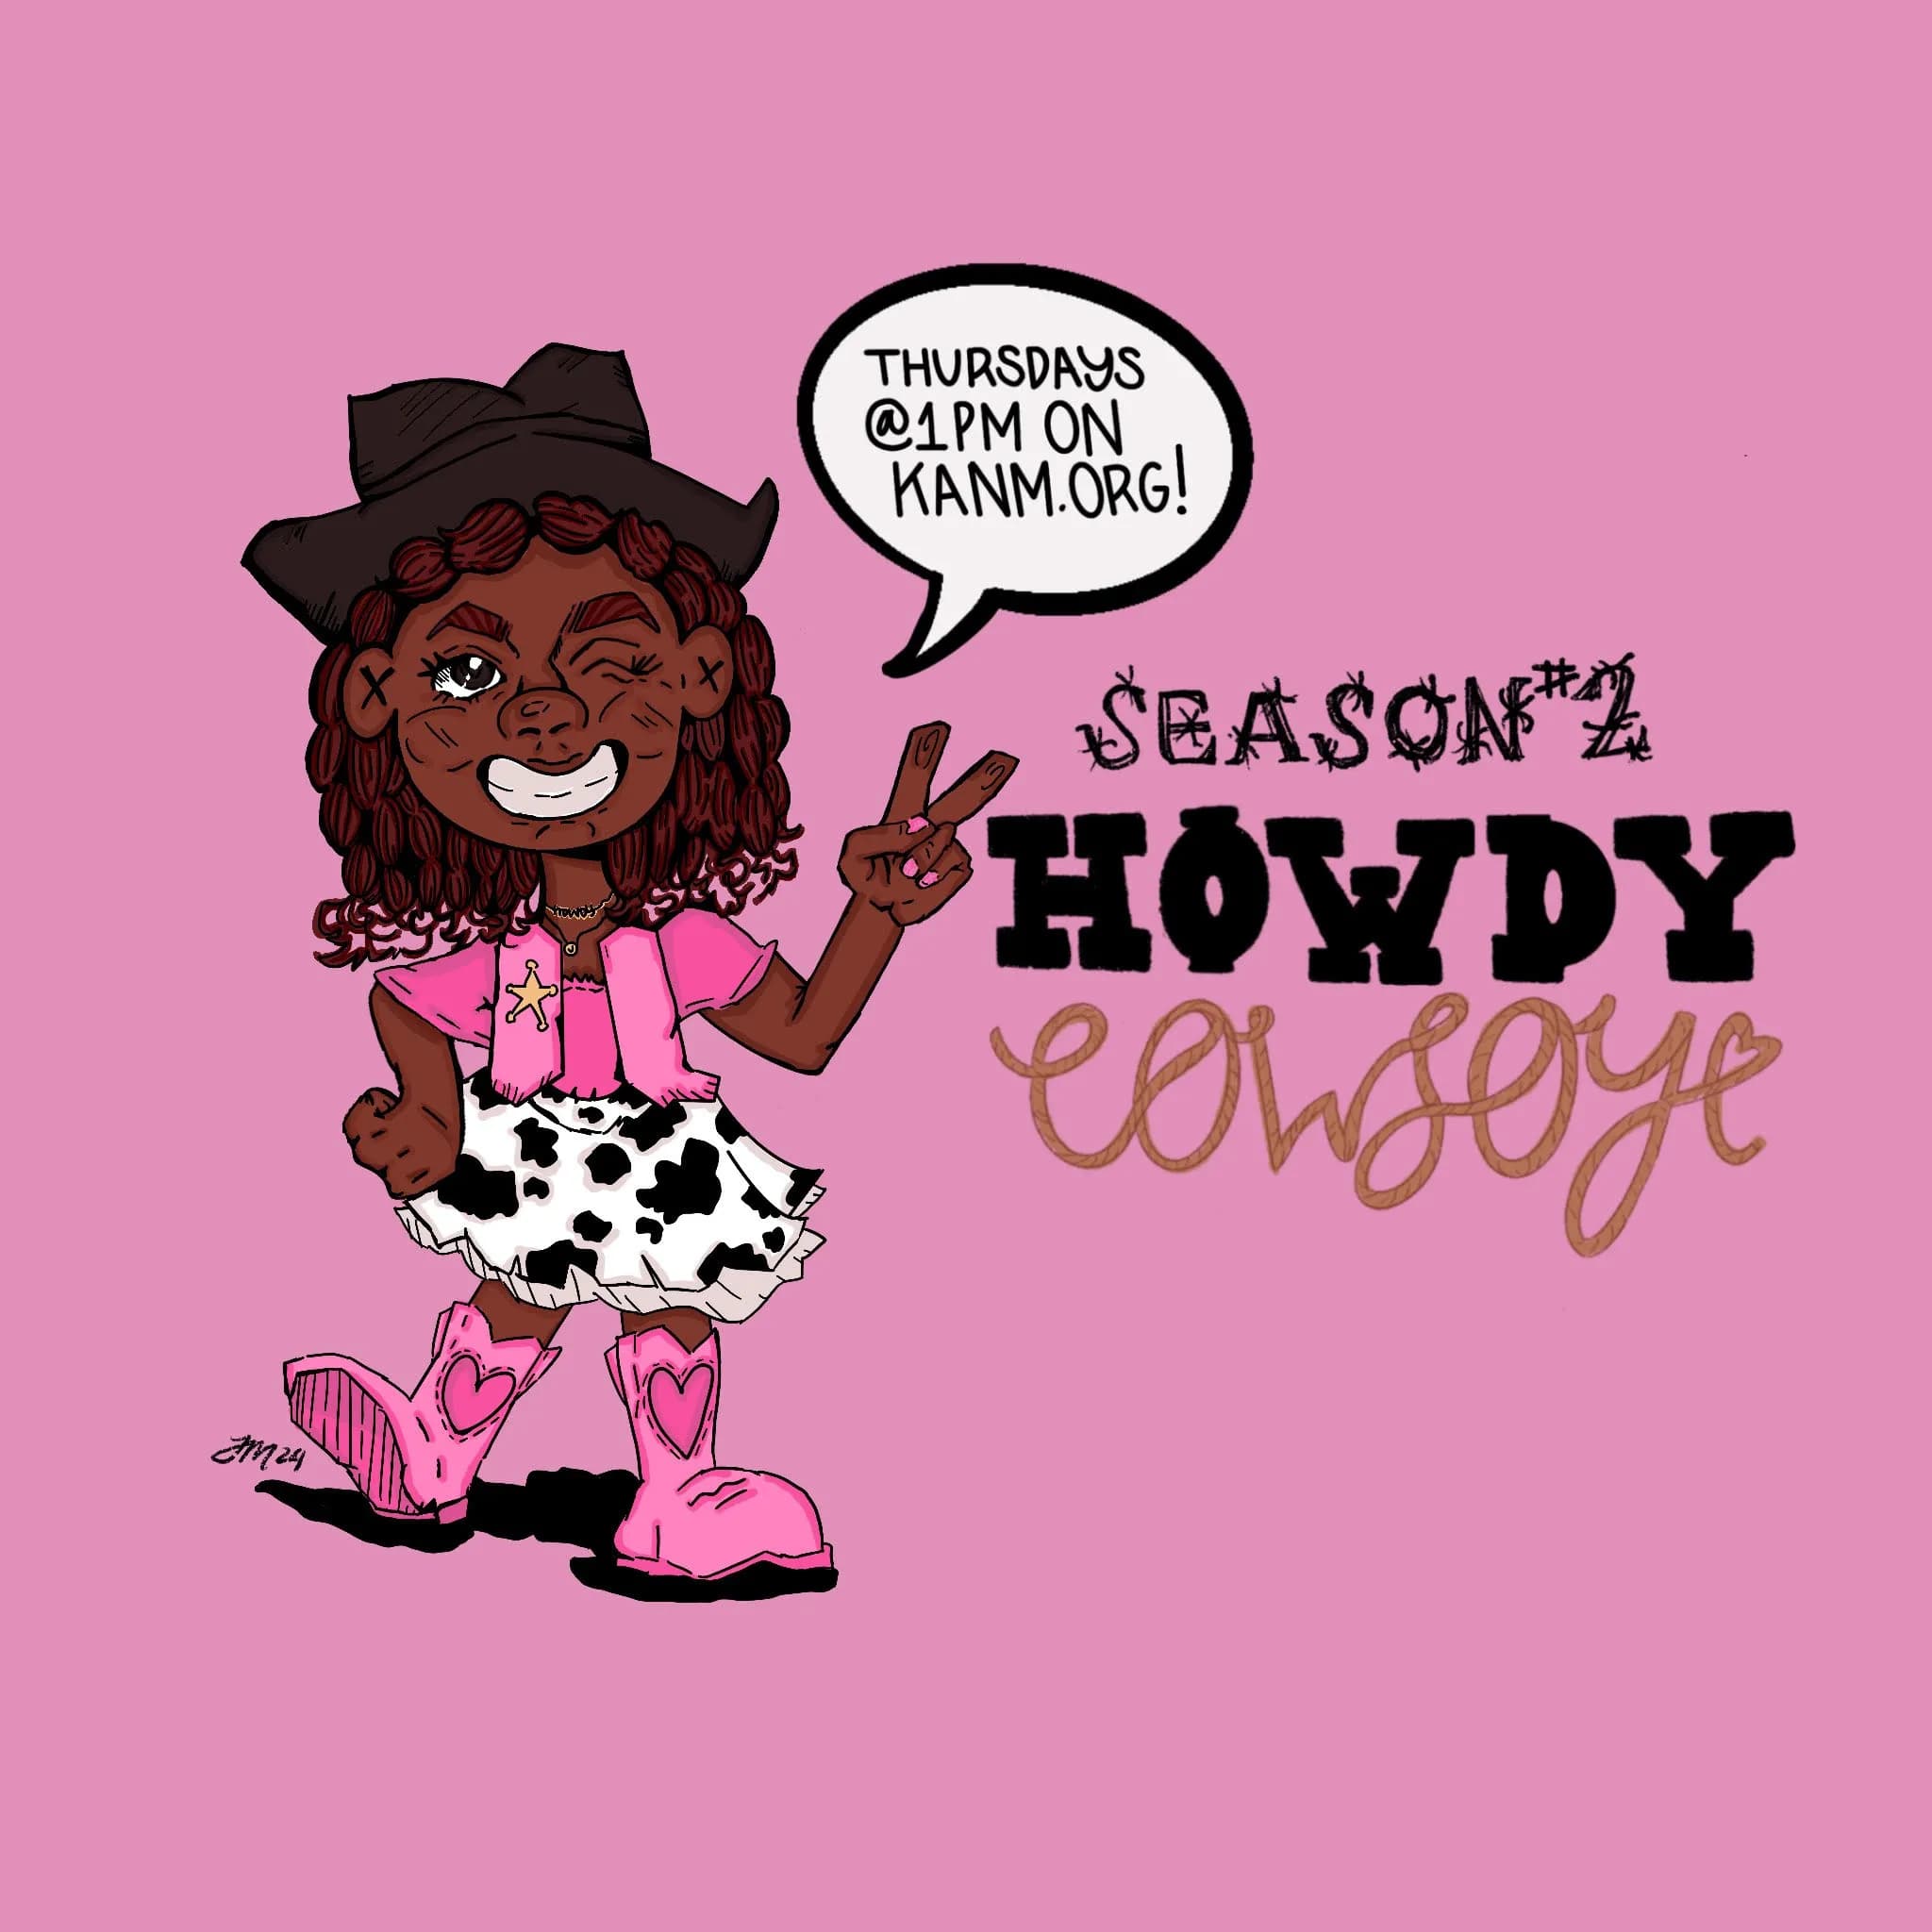 Howdy Cowjoy